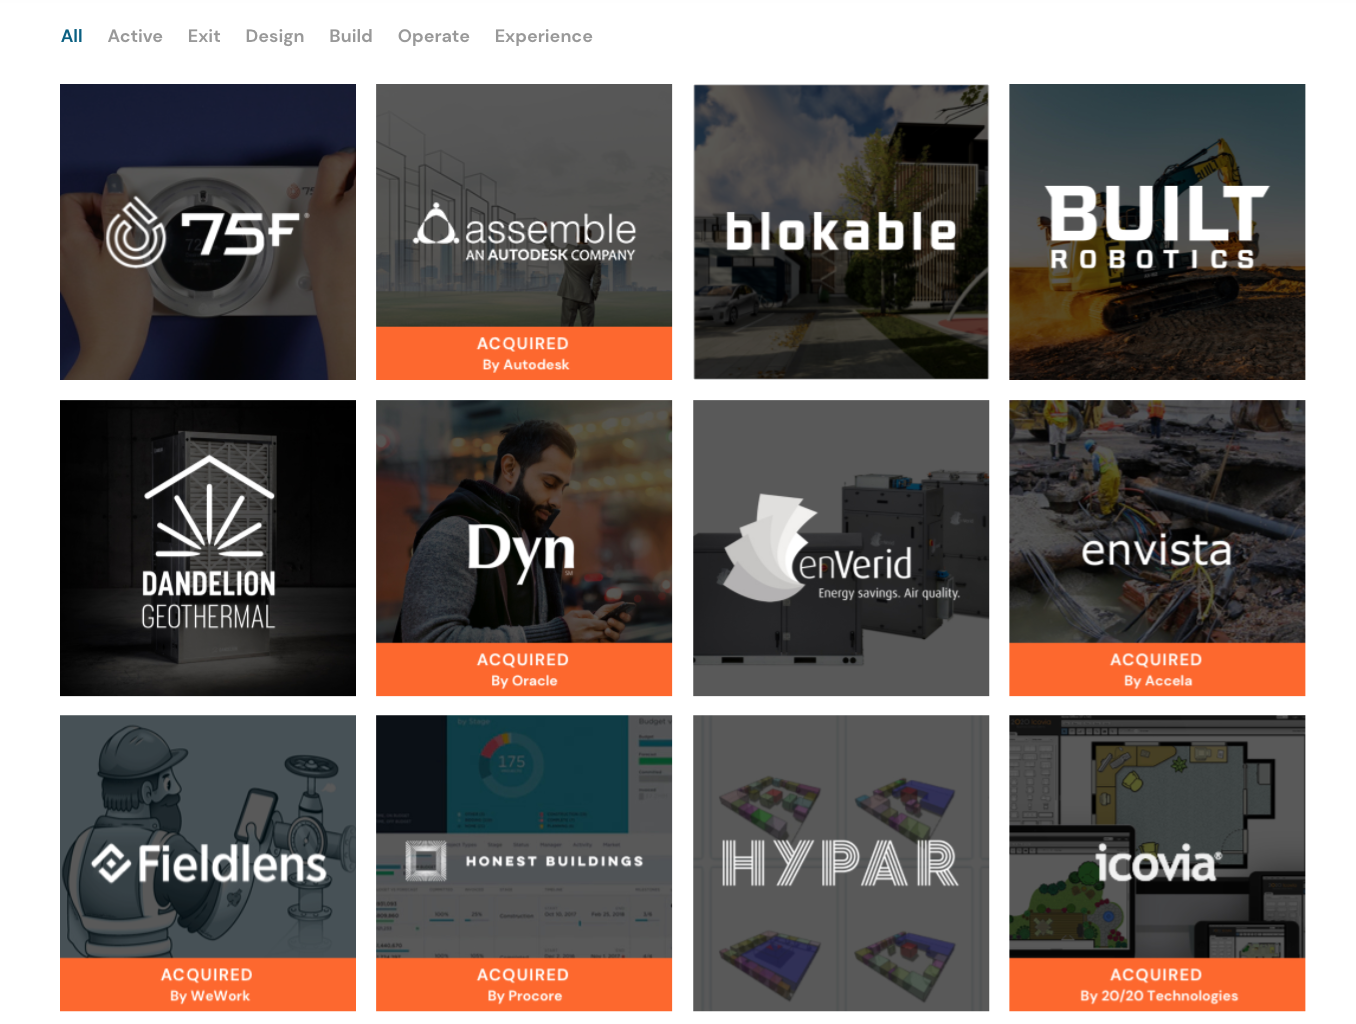 Building Ventures company page screenshot